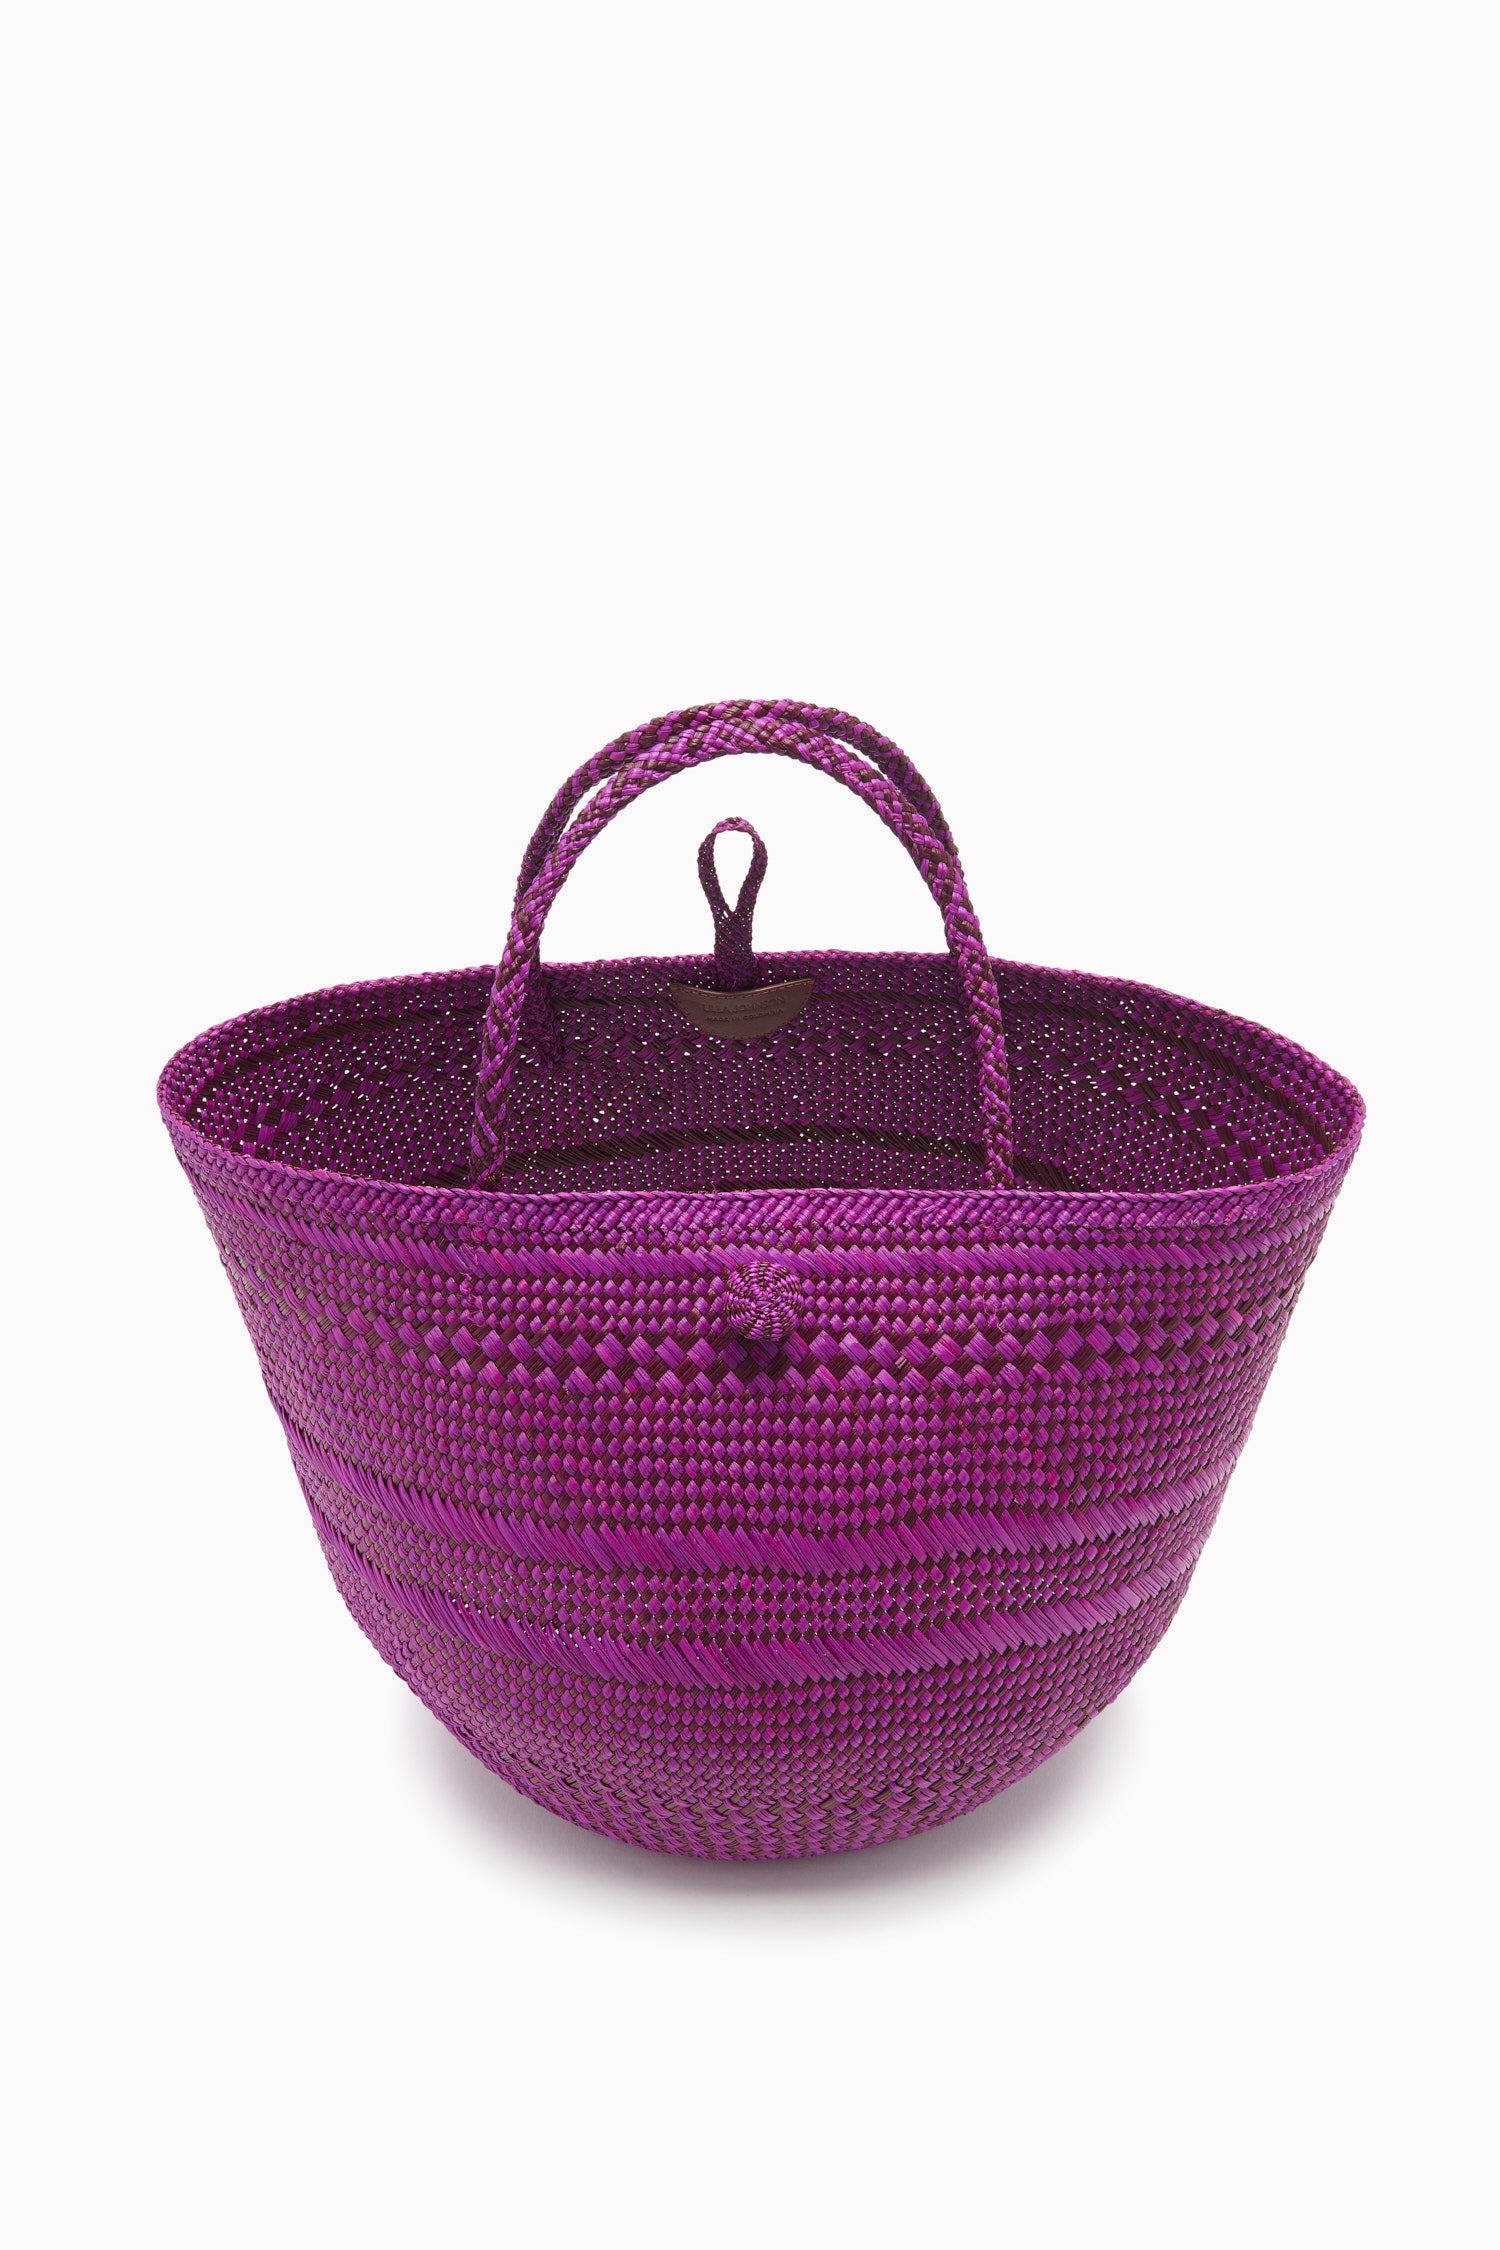 Ulla Johnson Marta Large Basket Tote - Orchid Stripe